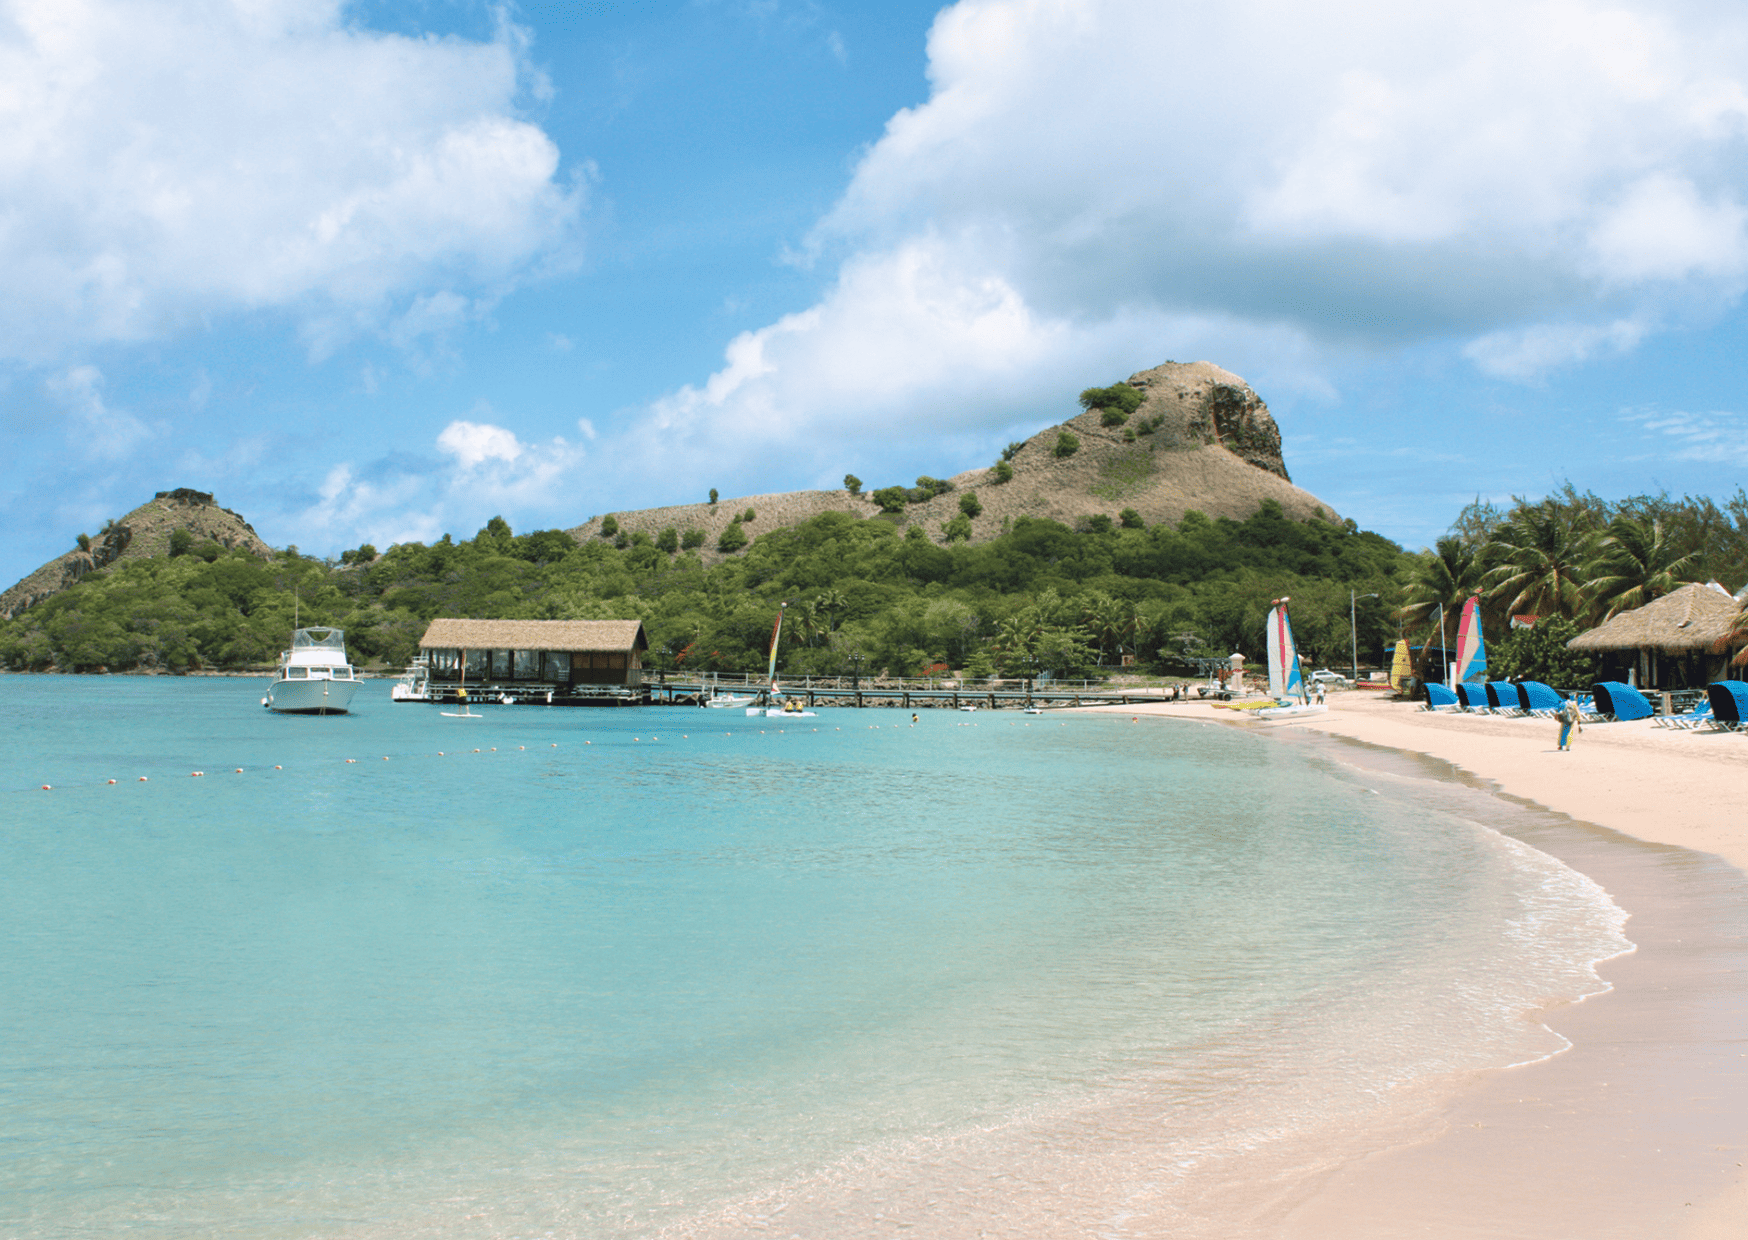 St Lucia vs Barbados - The Better Caribbean Destination?